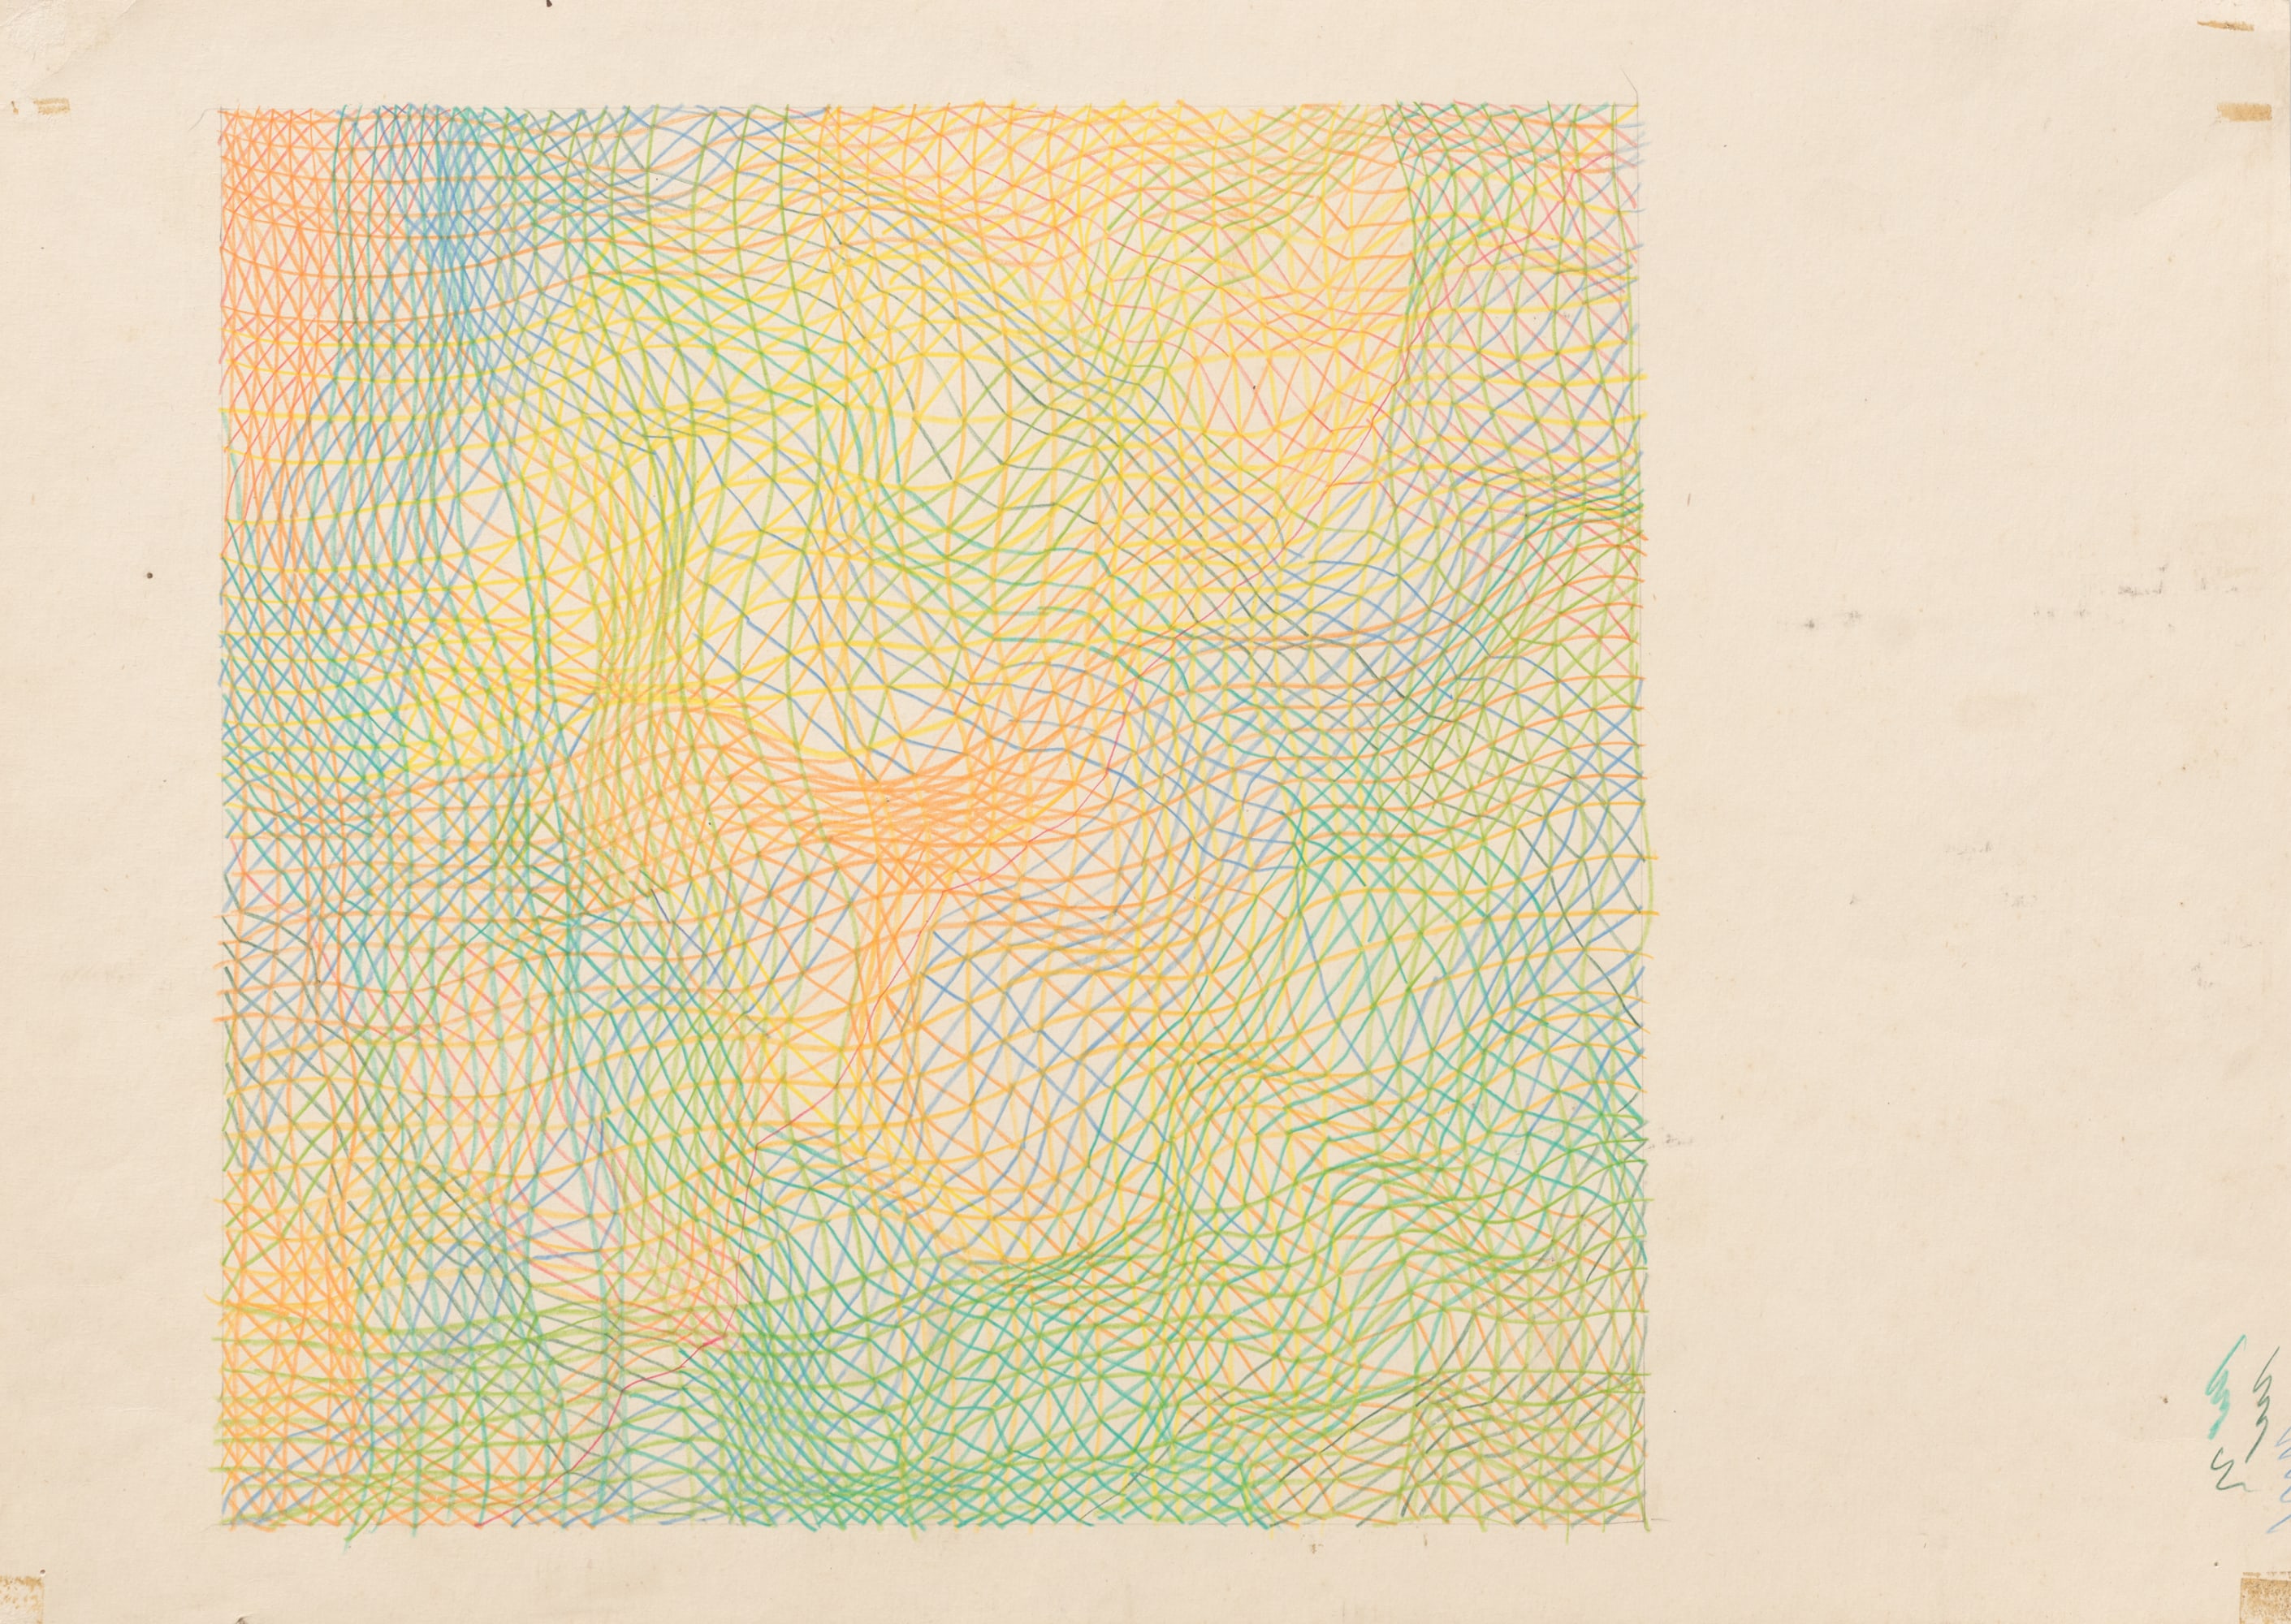 Stefan Bertalan Network, 1973–1974, crayon on paper, 34,7 x 48,9 cm (unframed), 55,3 x 69,5 x 4,2 cm (framed).Photo © Jörg von Bruchhausen